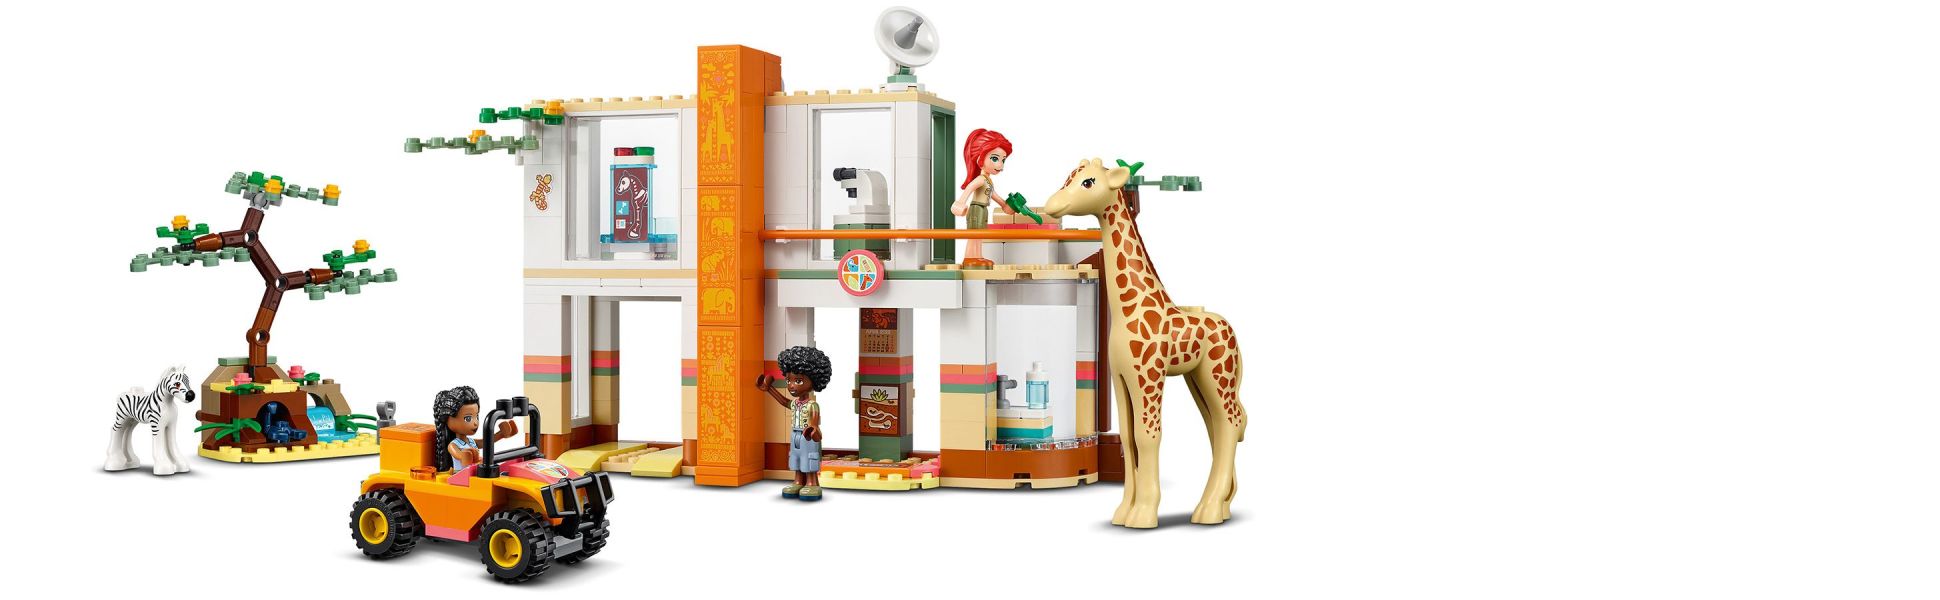 LEGO Friends Mia's Wildlife Rescue Toy 41717 with Zebra and Giraffe Safari  Animal Figures plus 3 Mini Dolls, Birthday Gift Idea for Kids, Girls & Boys  Age 7 Plus Years Old